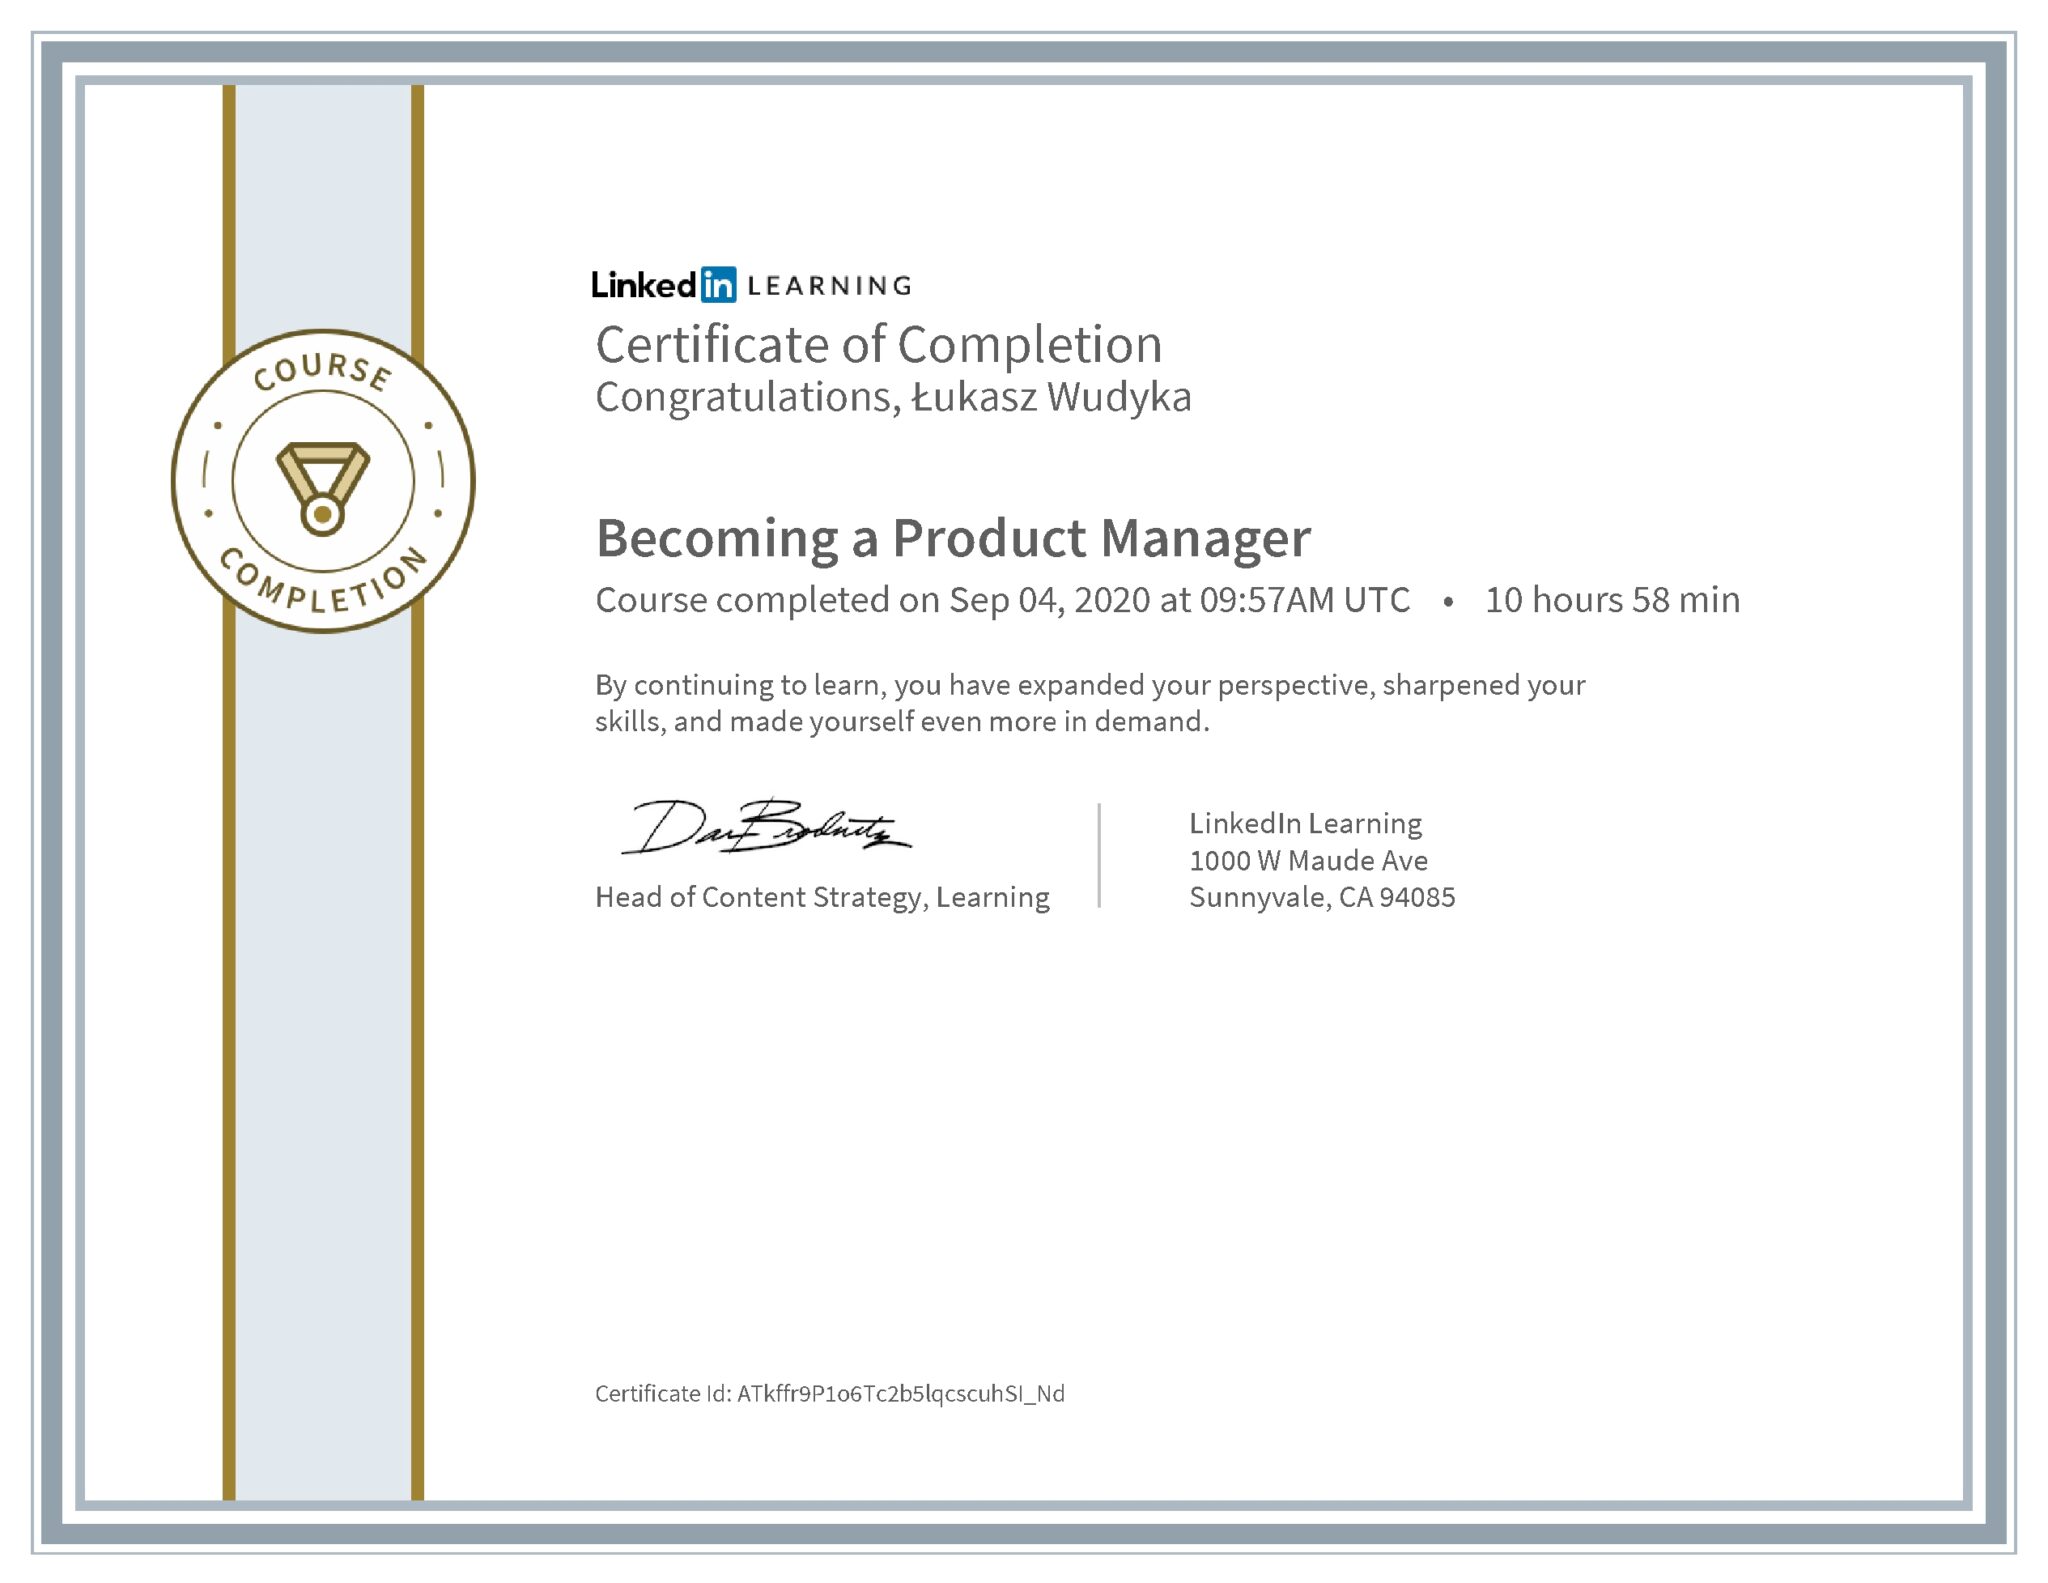 Łukasz Wudyka certyfikat LinkedIn Becoming a Product Manager